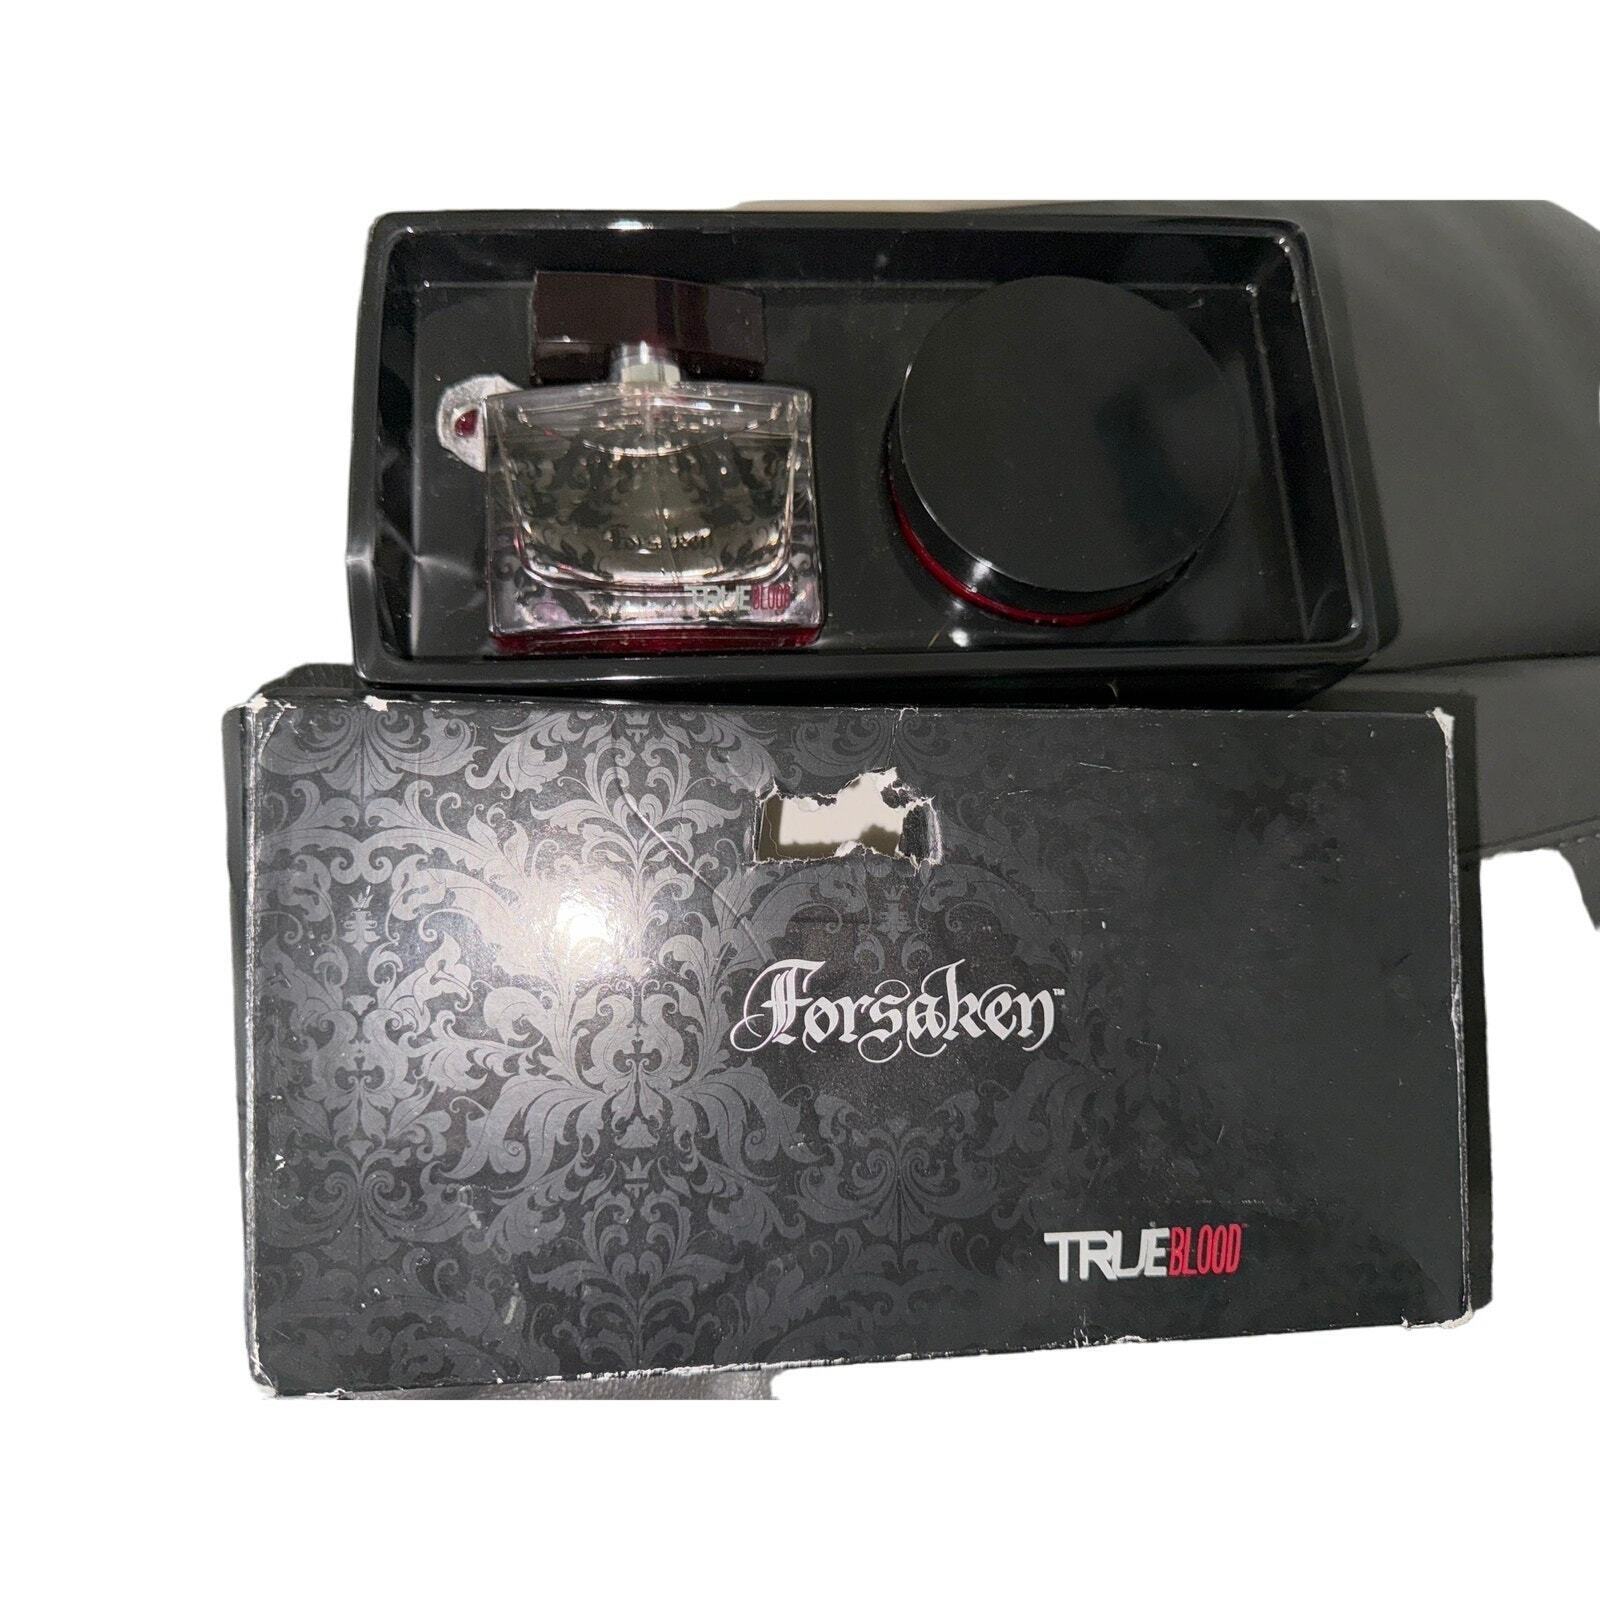 In box Forsaken True Blood Perfume (1.7 oz) EDP Spray & Body Cream (4.5 oz) 2012